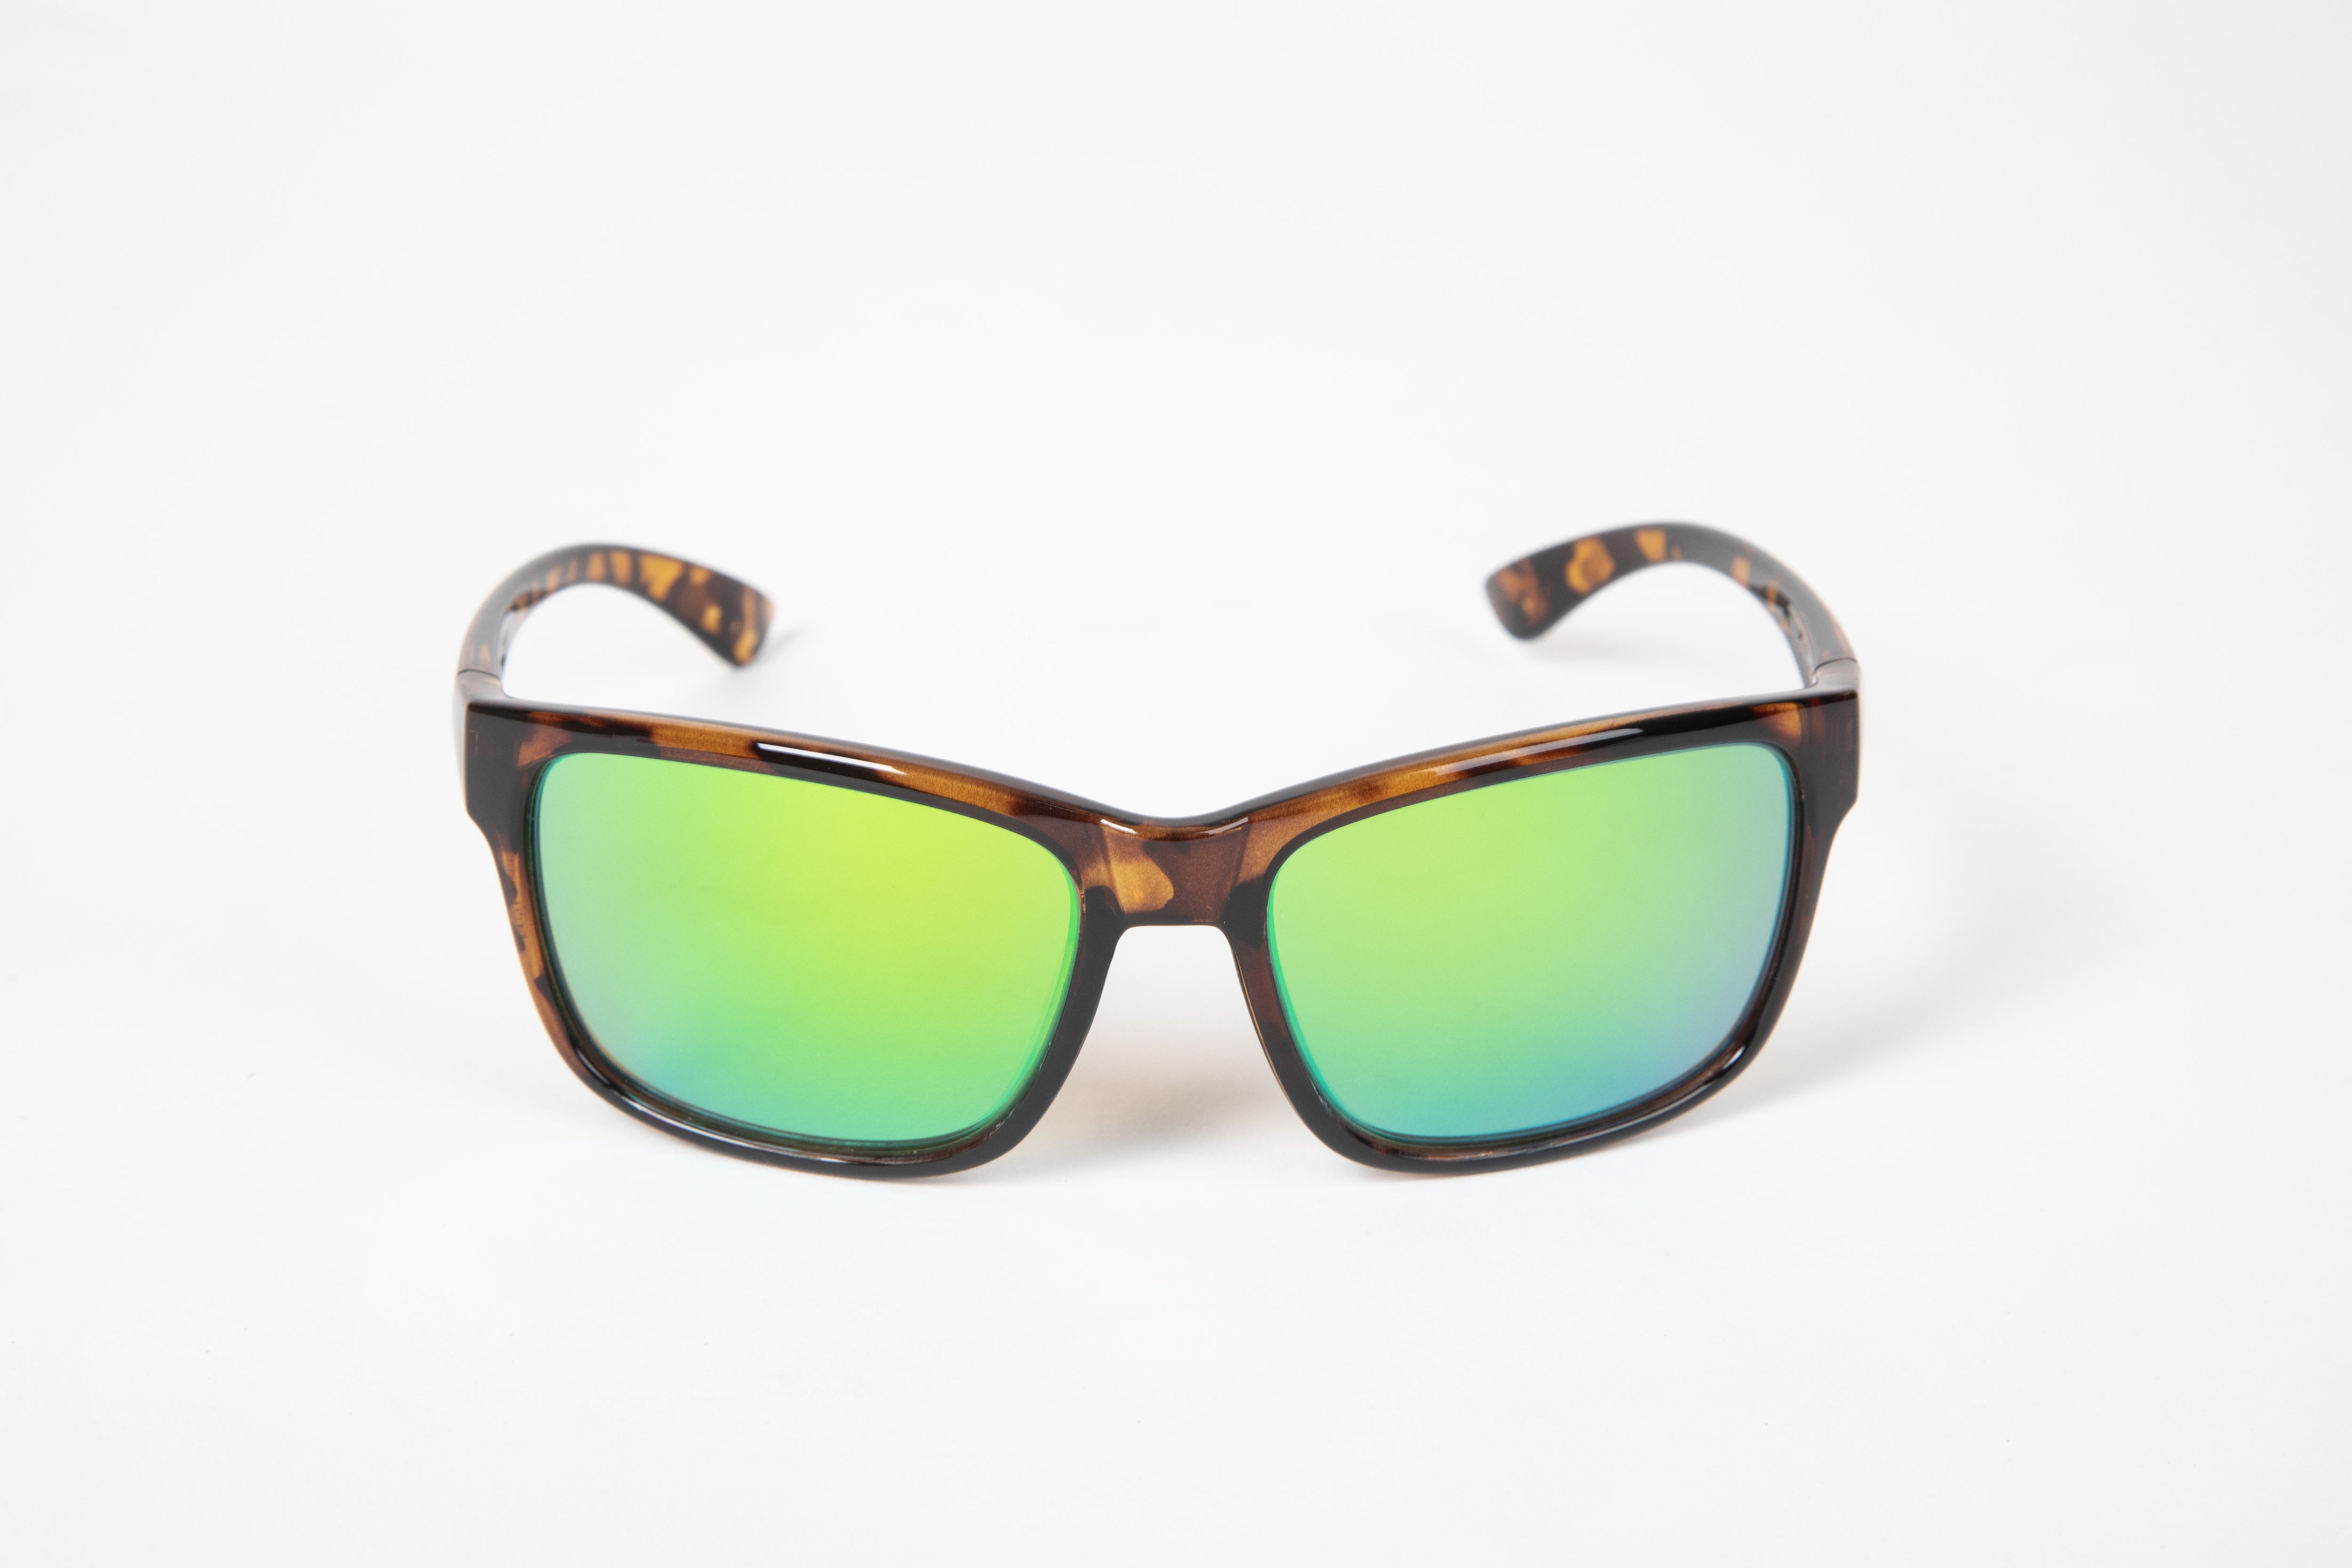 Greenhorn – Ocean Waves Sunglasses